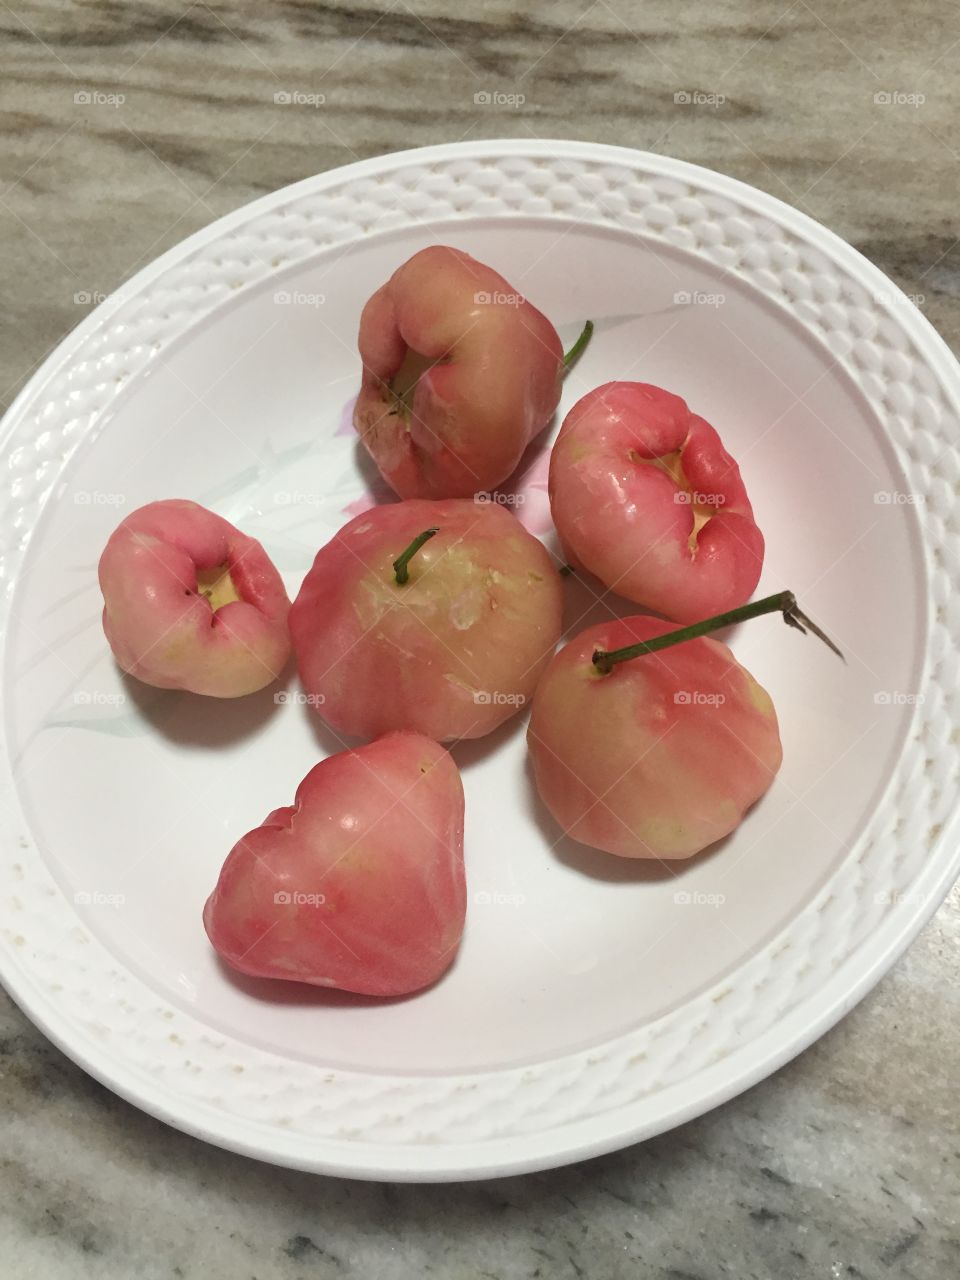 Java Apple ... Rose Apple ... Jambu 莲雾。Picked from a roadside tree at Tampines, Singapore